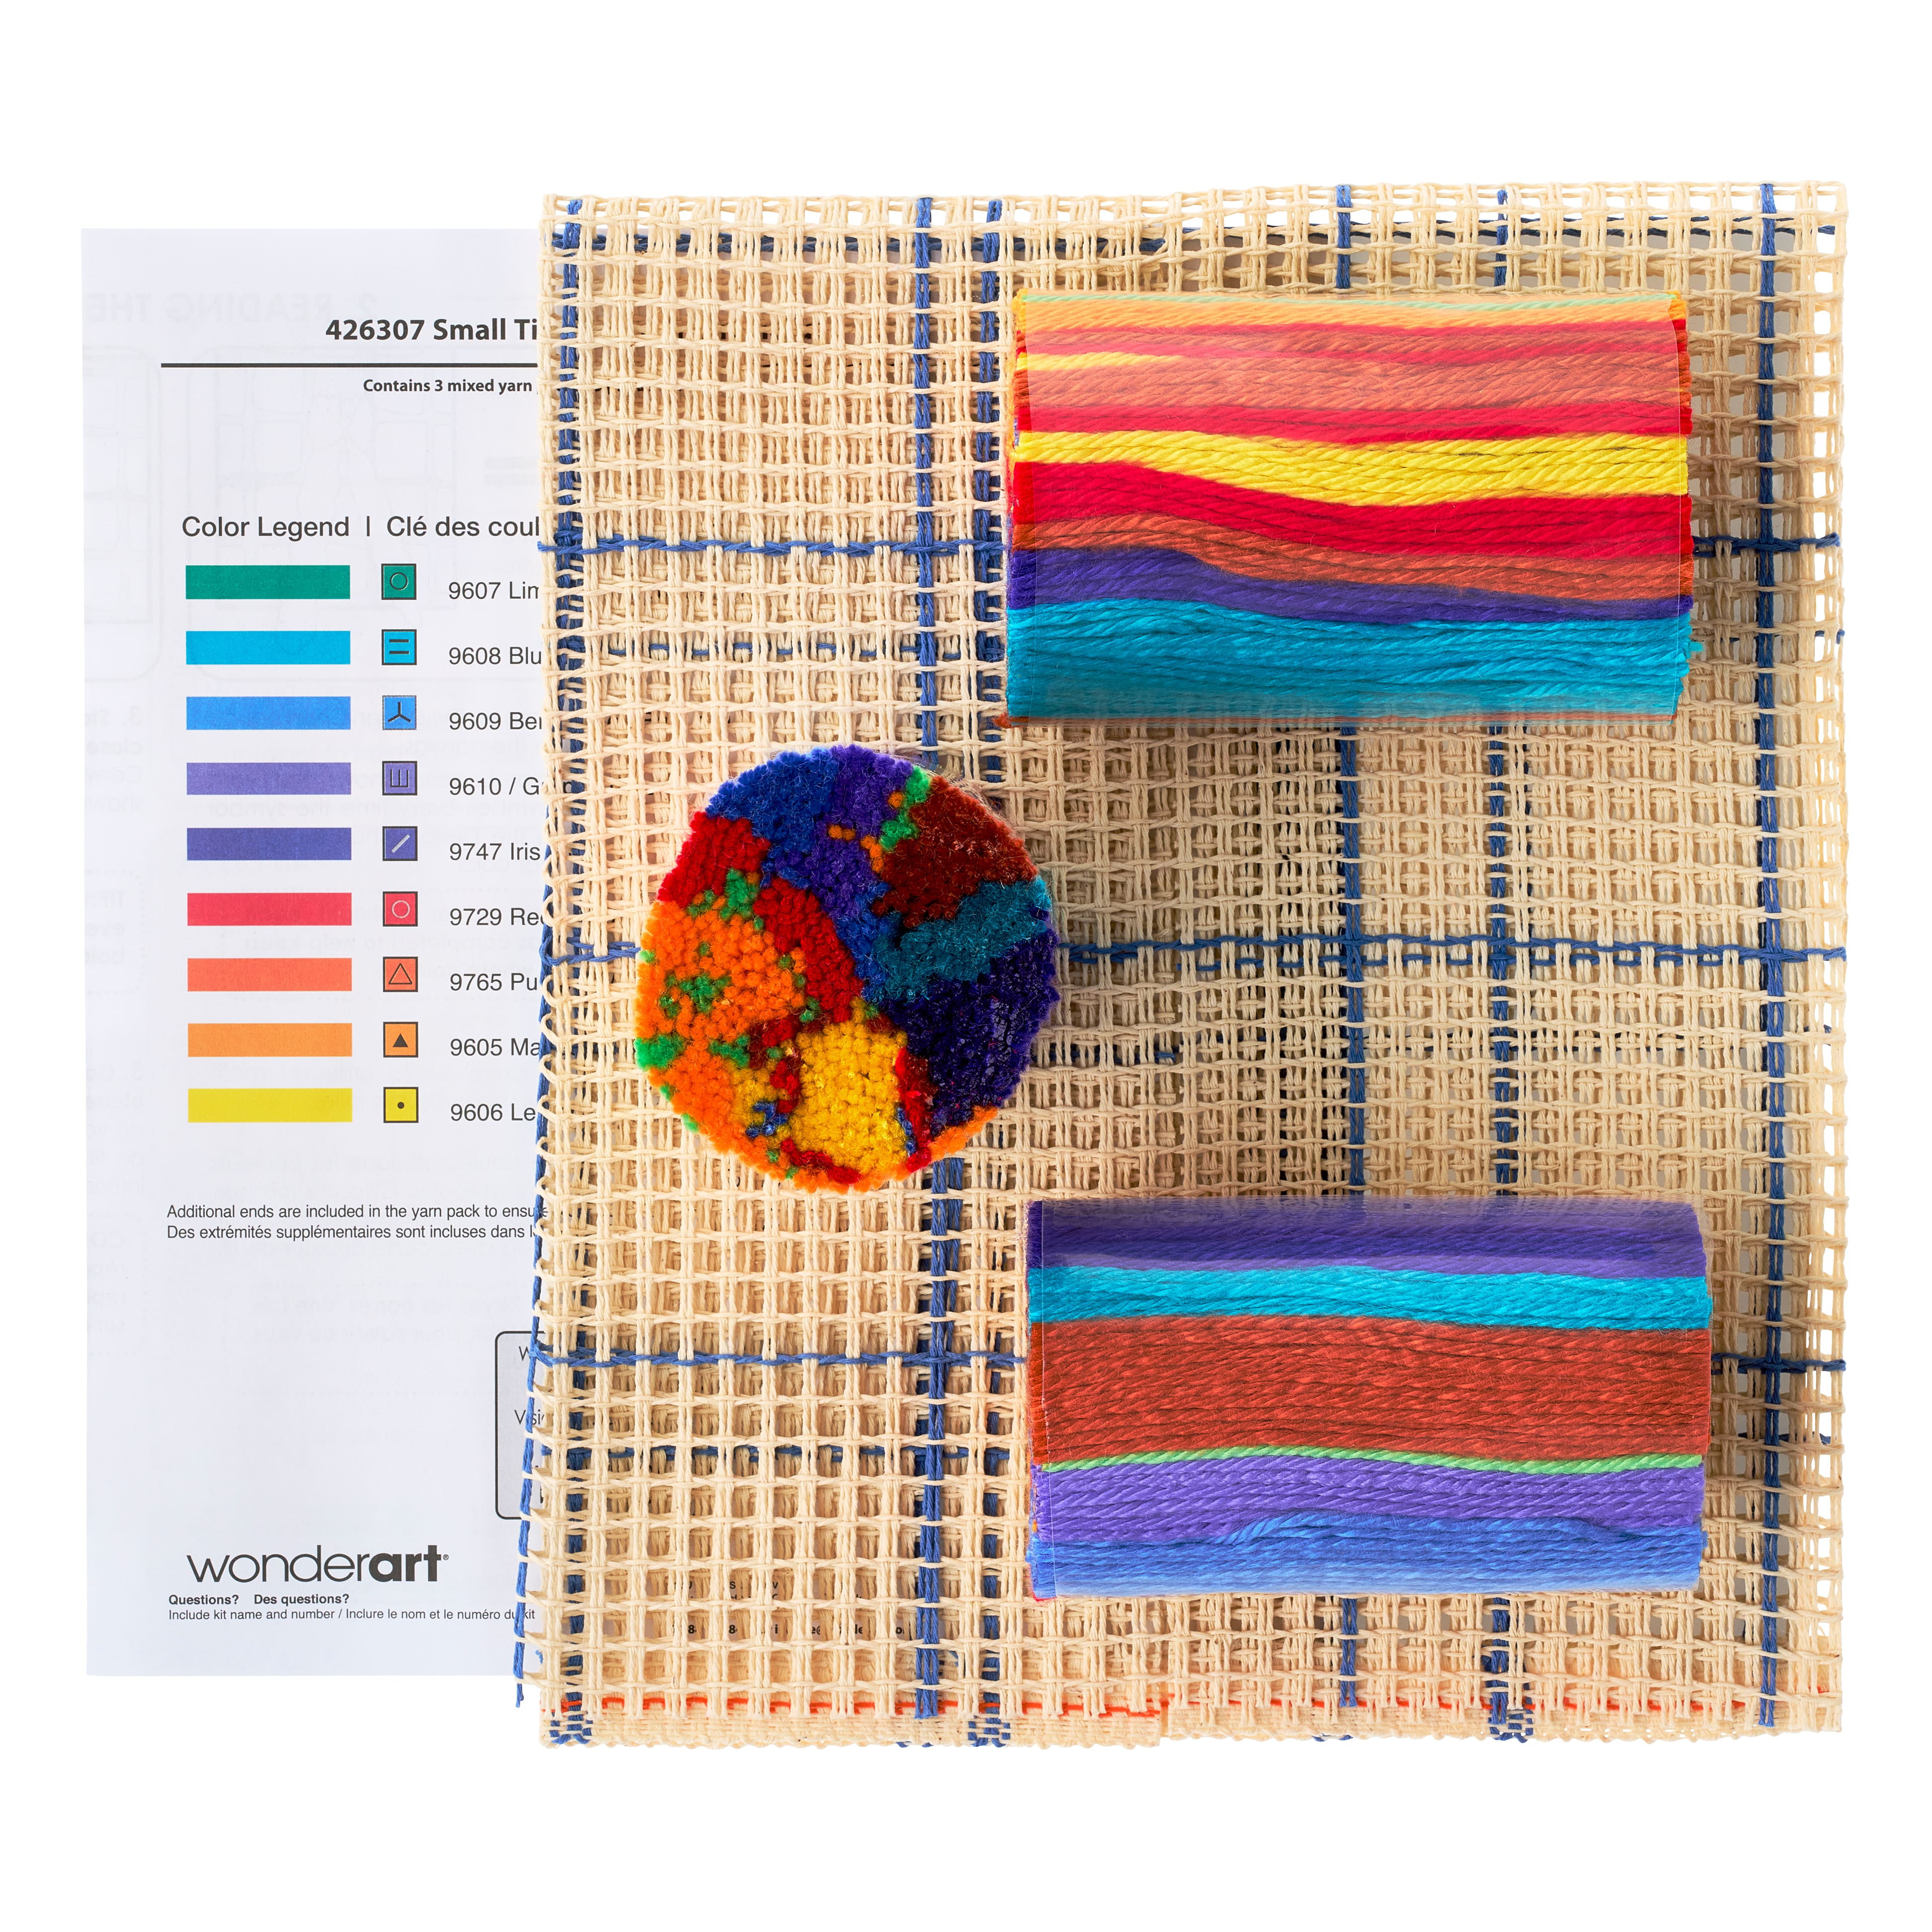 Wonderart 12 inch x 12 inch Latch Hook Kit, Sunshine Rainbow, Acrylic Yarn Cotton Canvas, Size: 12 x 12